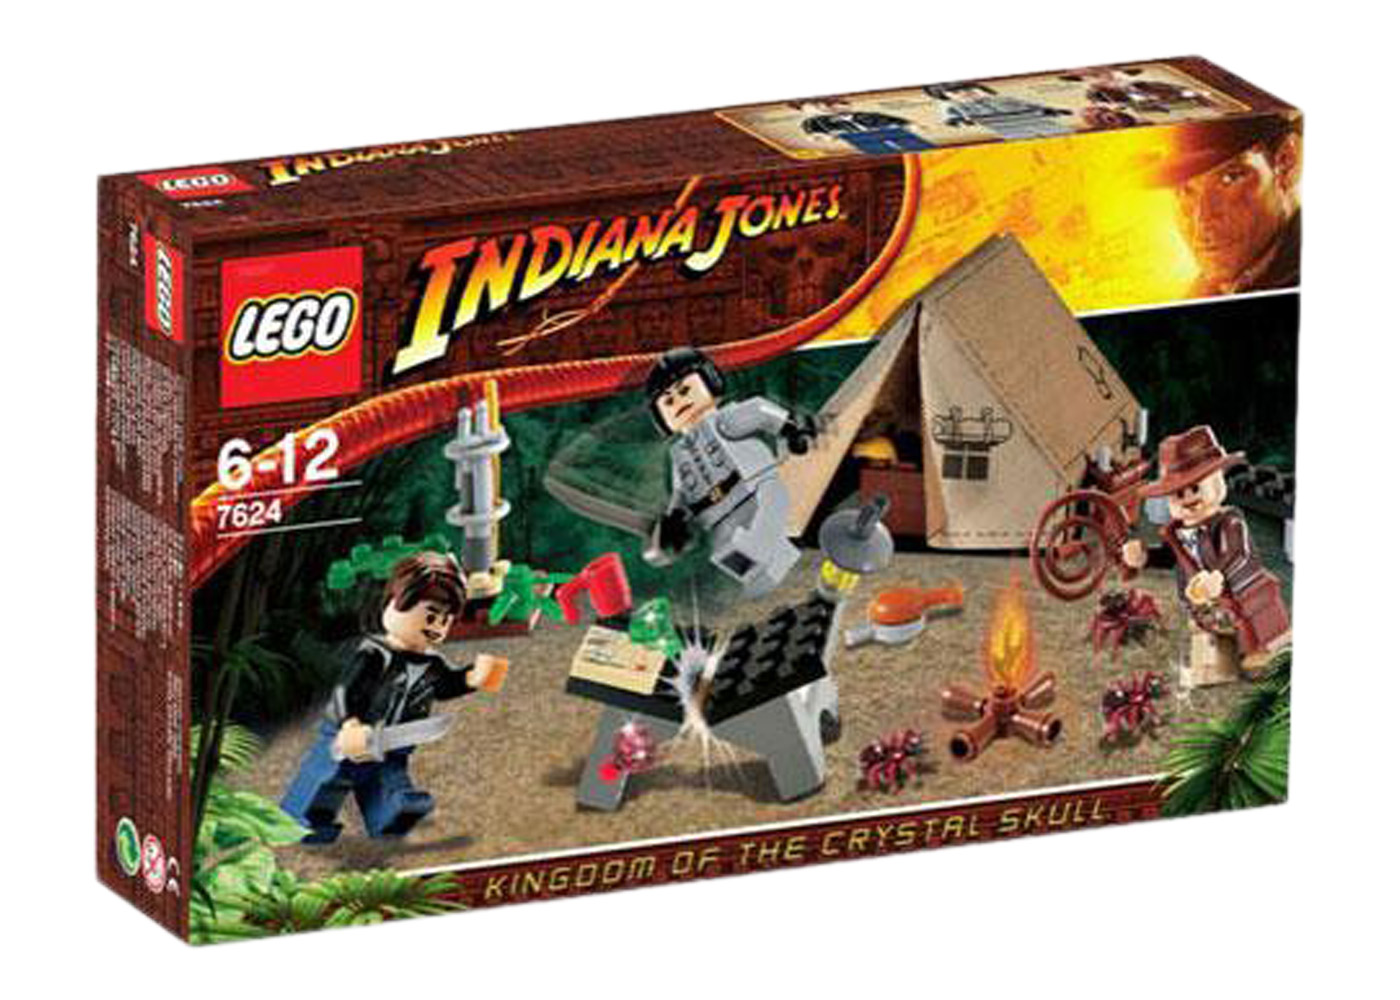 LEGO Indiana Jones Jungle Duel Set 7624